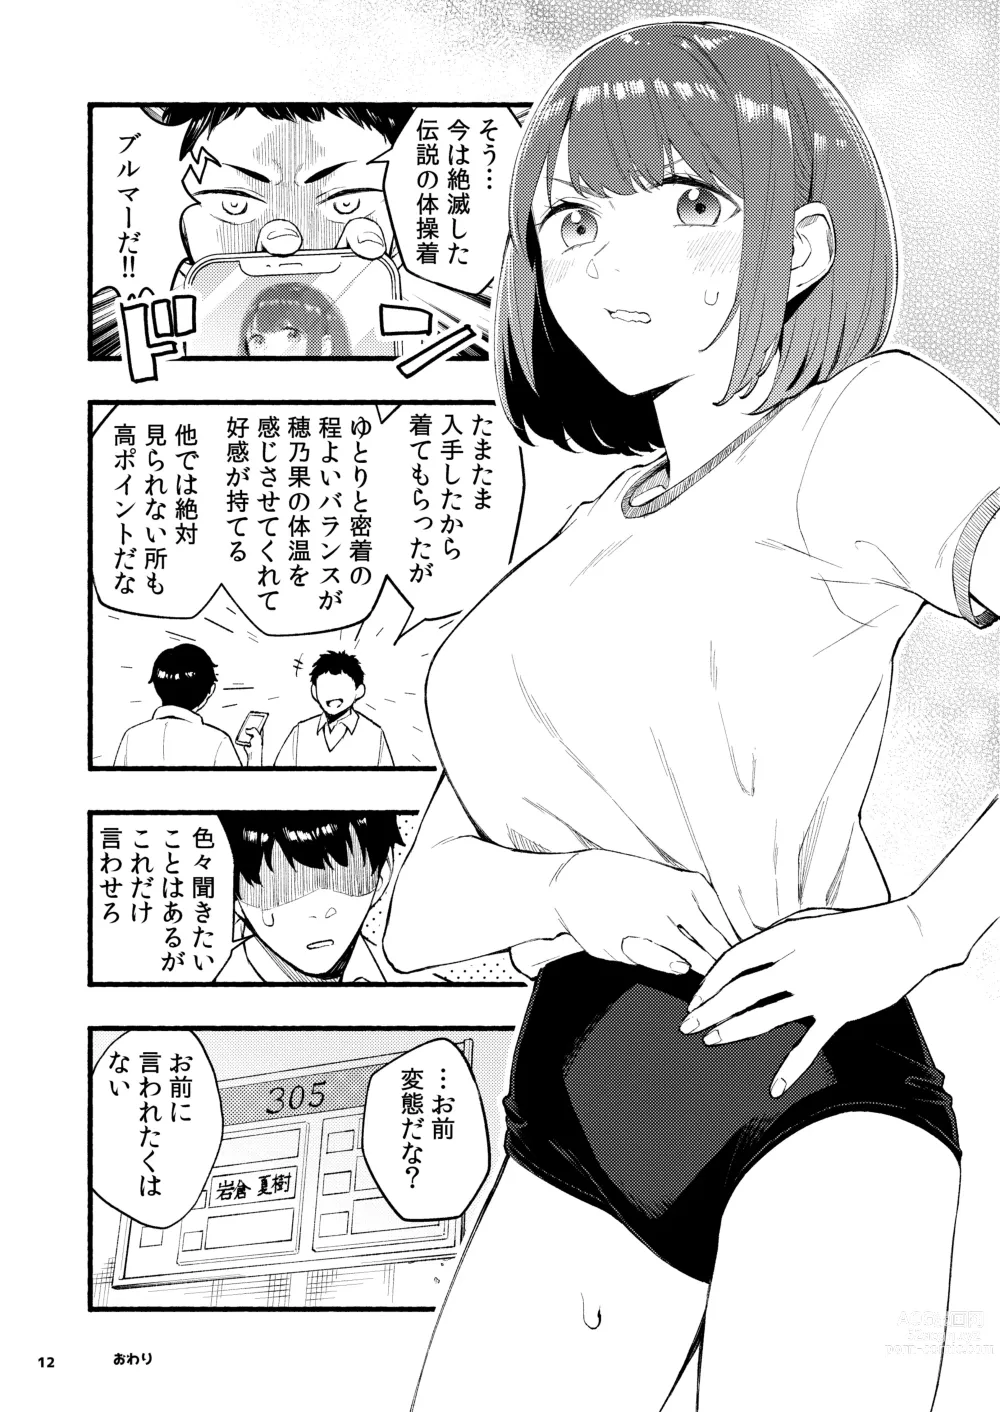 Page 89 of doujinshi Tomodachi no Shuwari